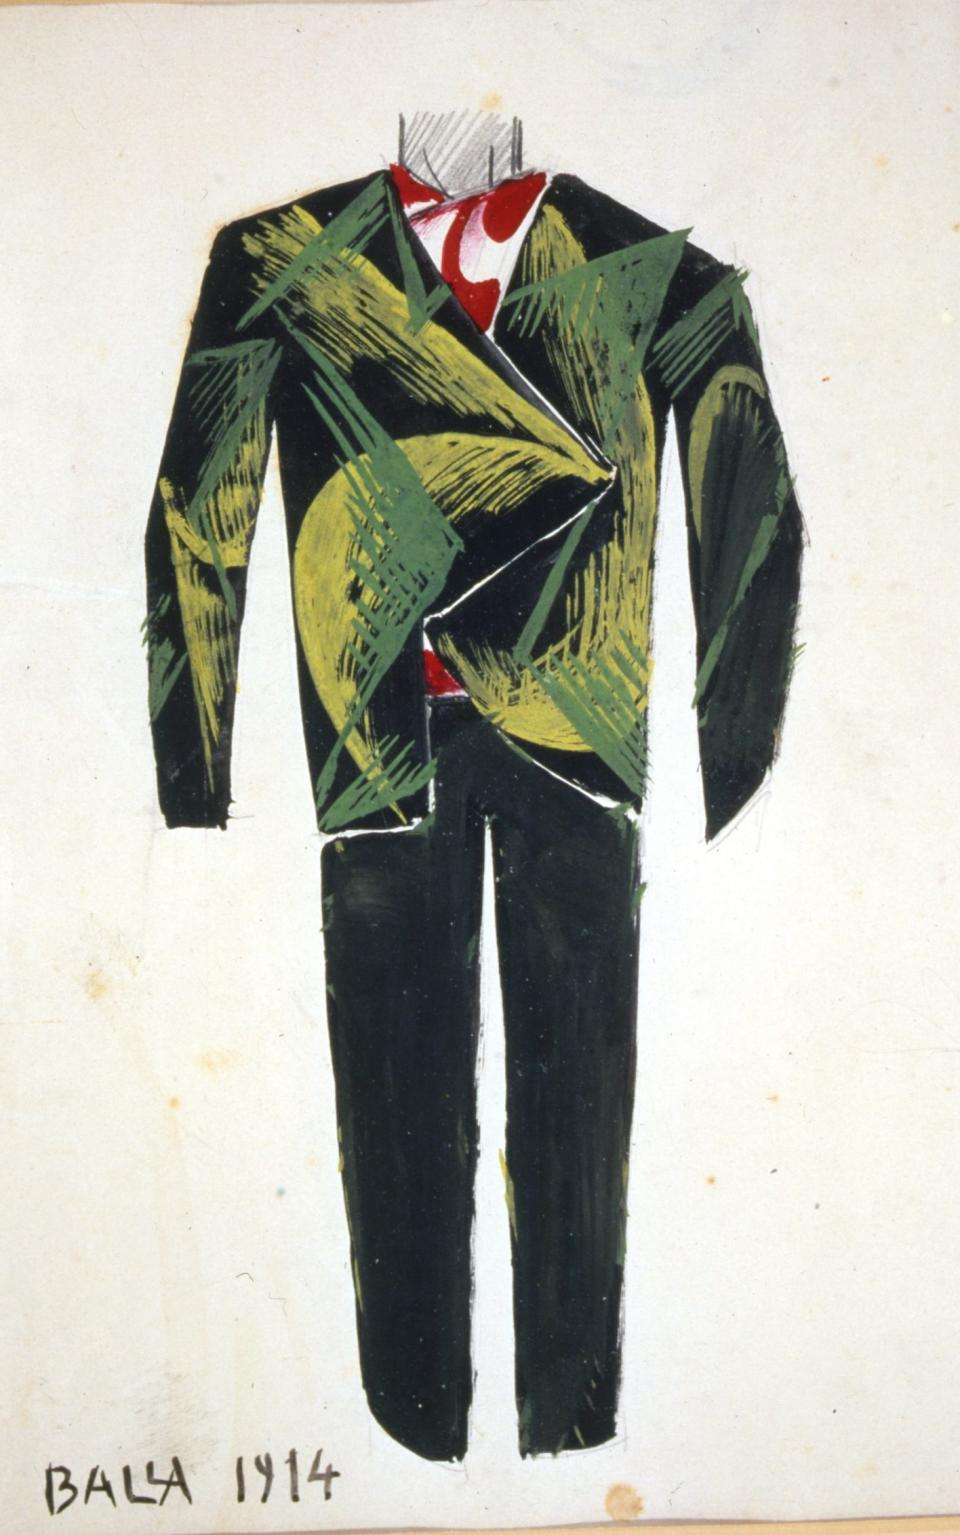 Giacomo Balla's Design for a Man’s Suit (1914) - Credit: The Biagiotti Cigna Foundation